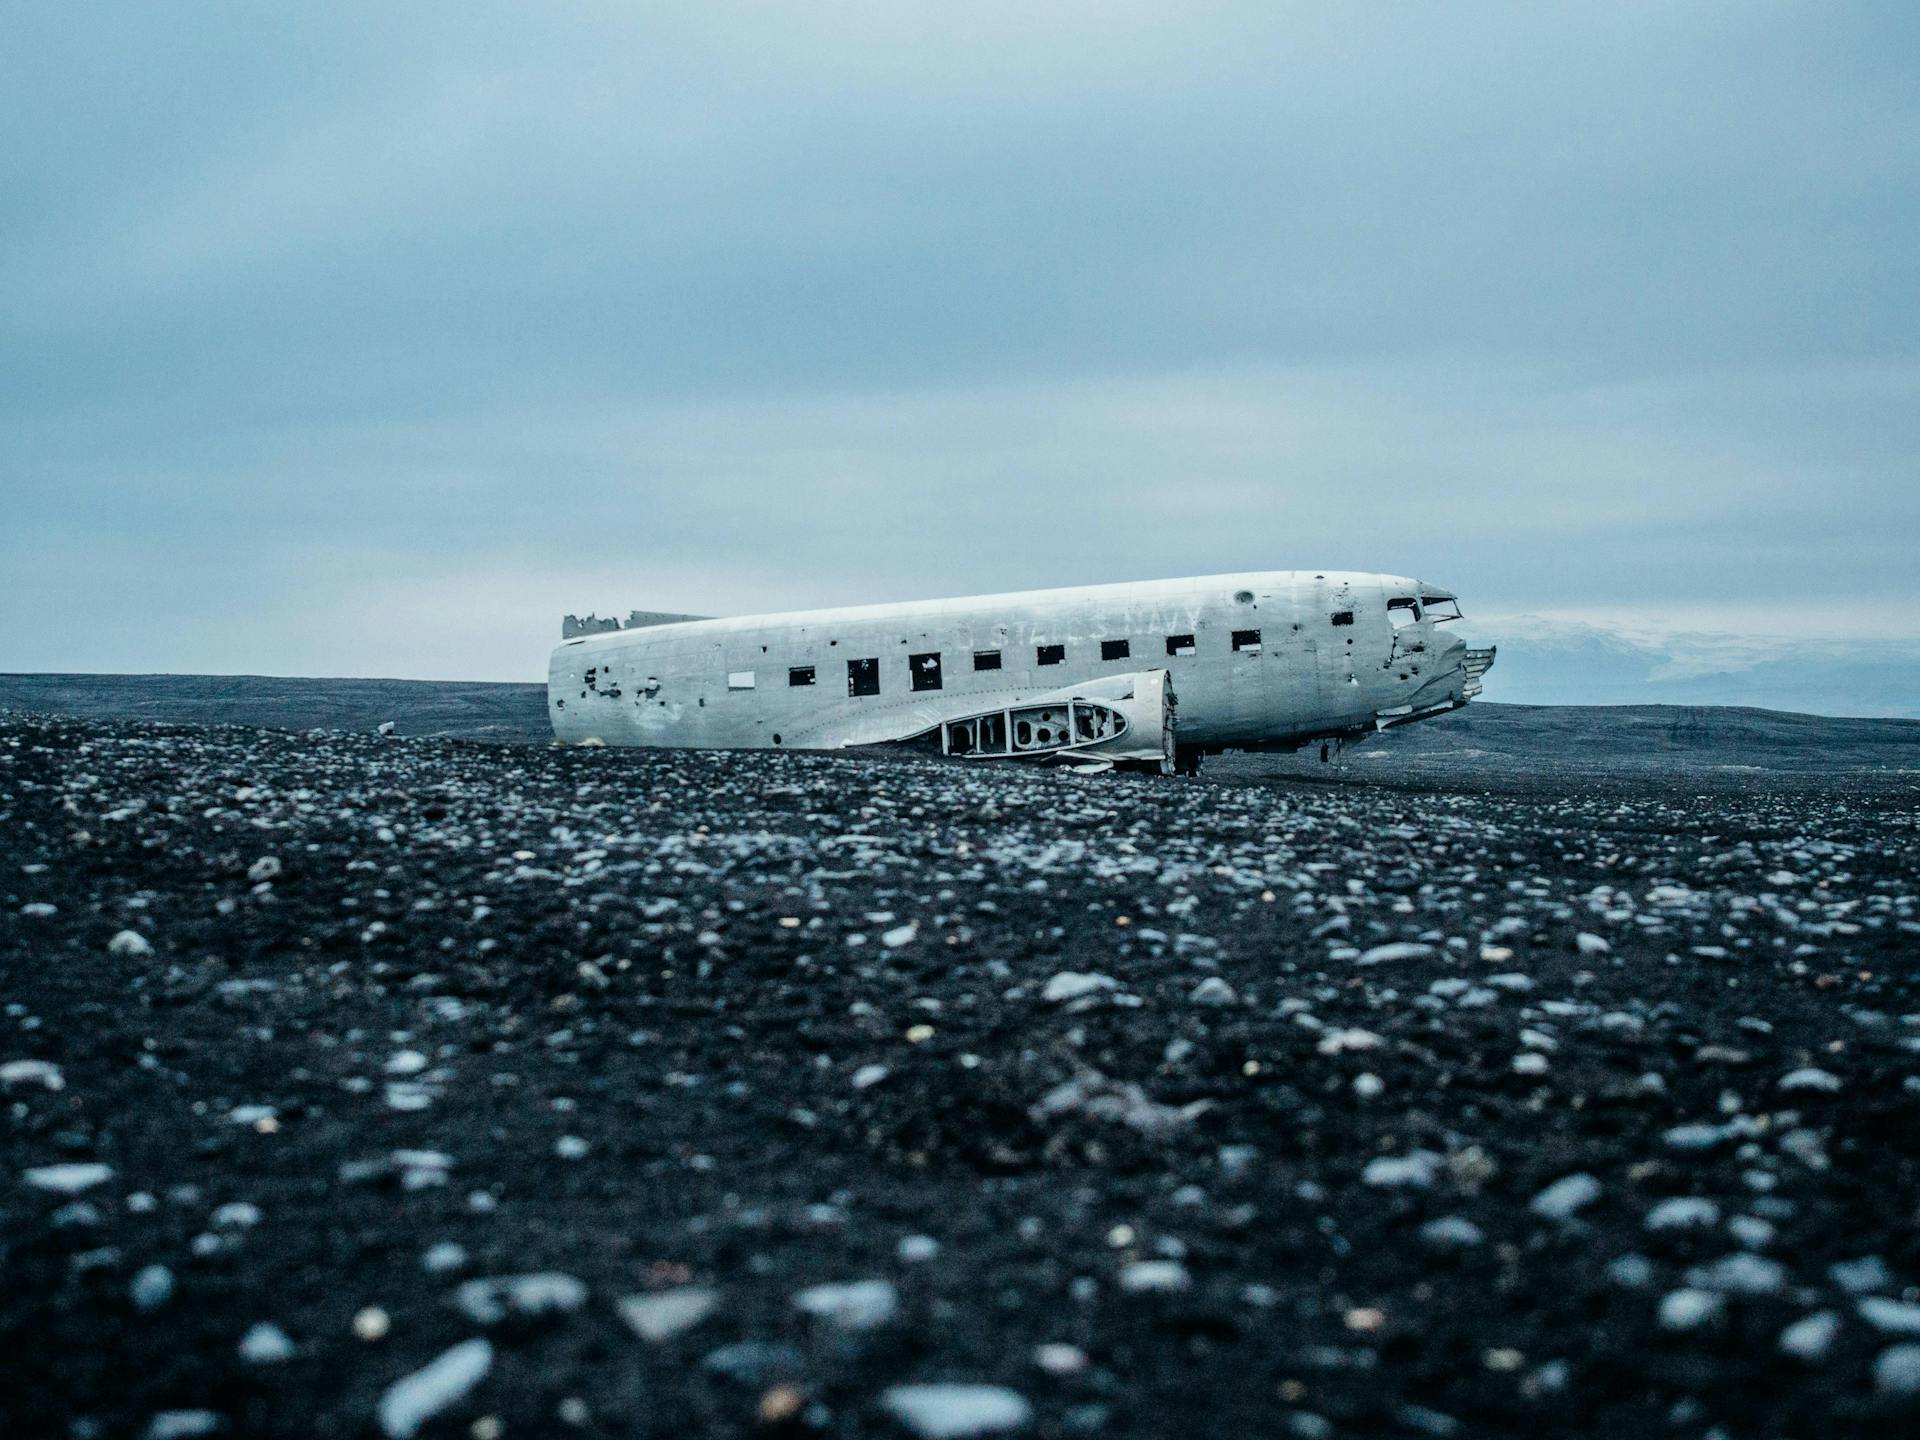 Sólheimasandur plane wreck in the southern part of Iceland. 